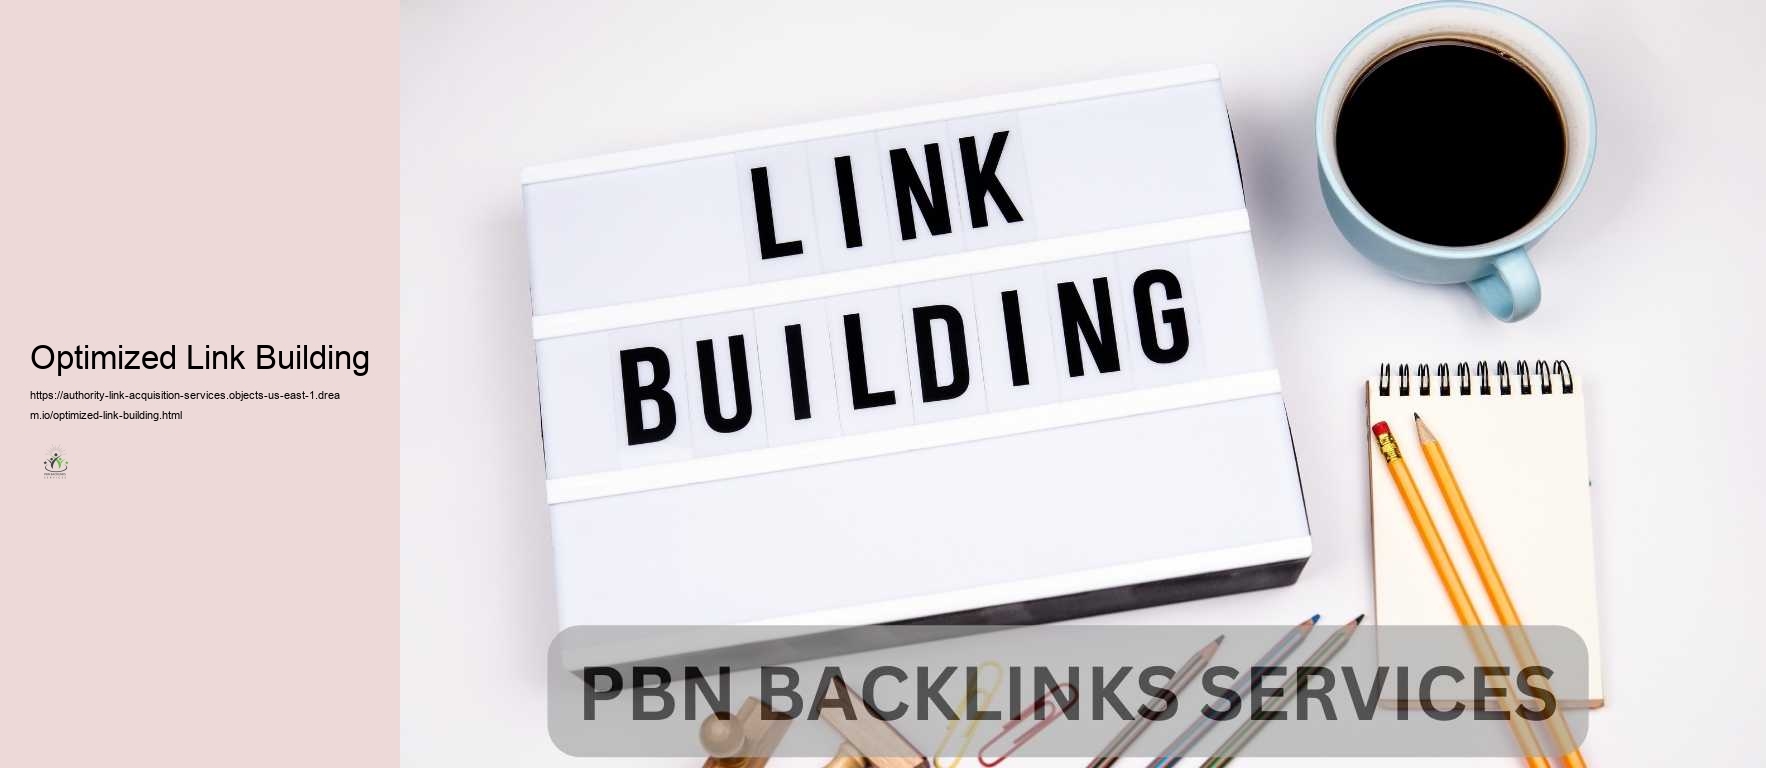 Optimized Link Building